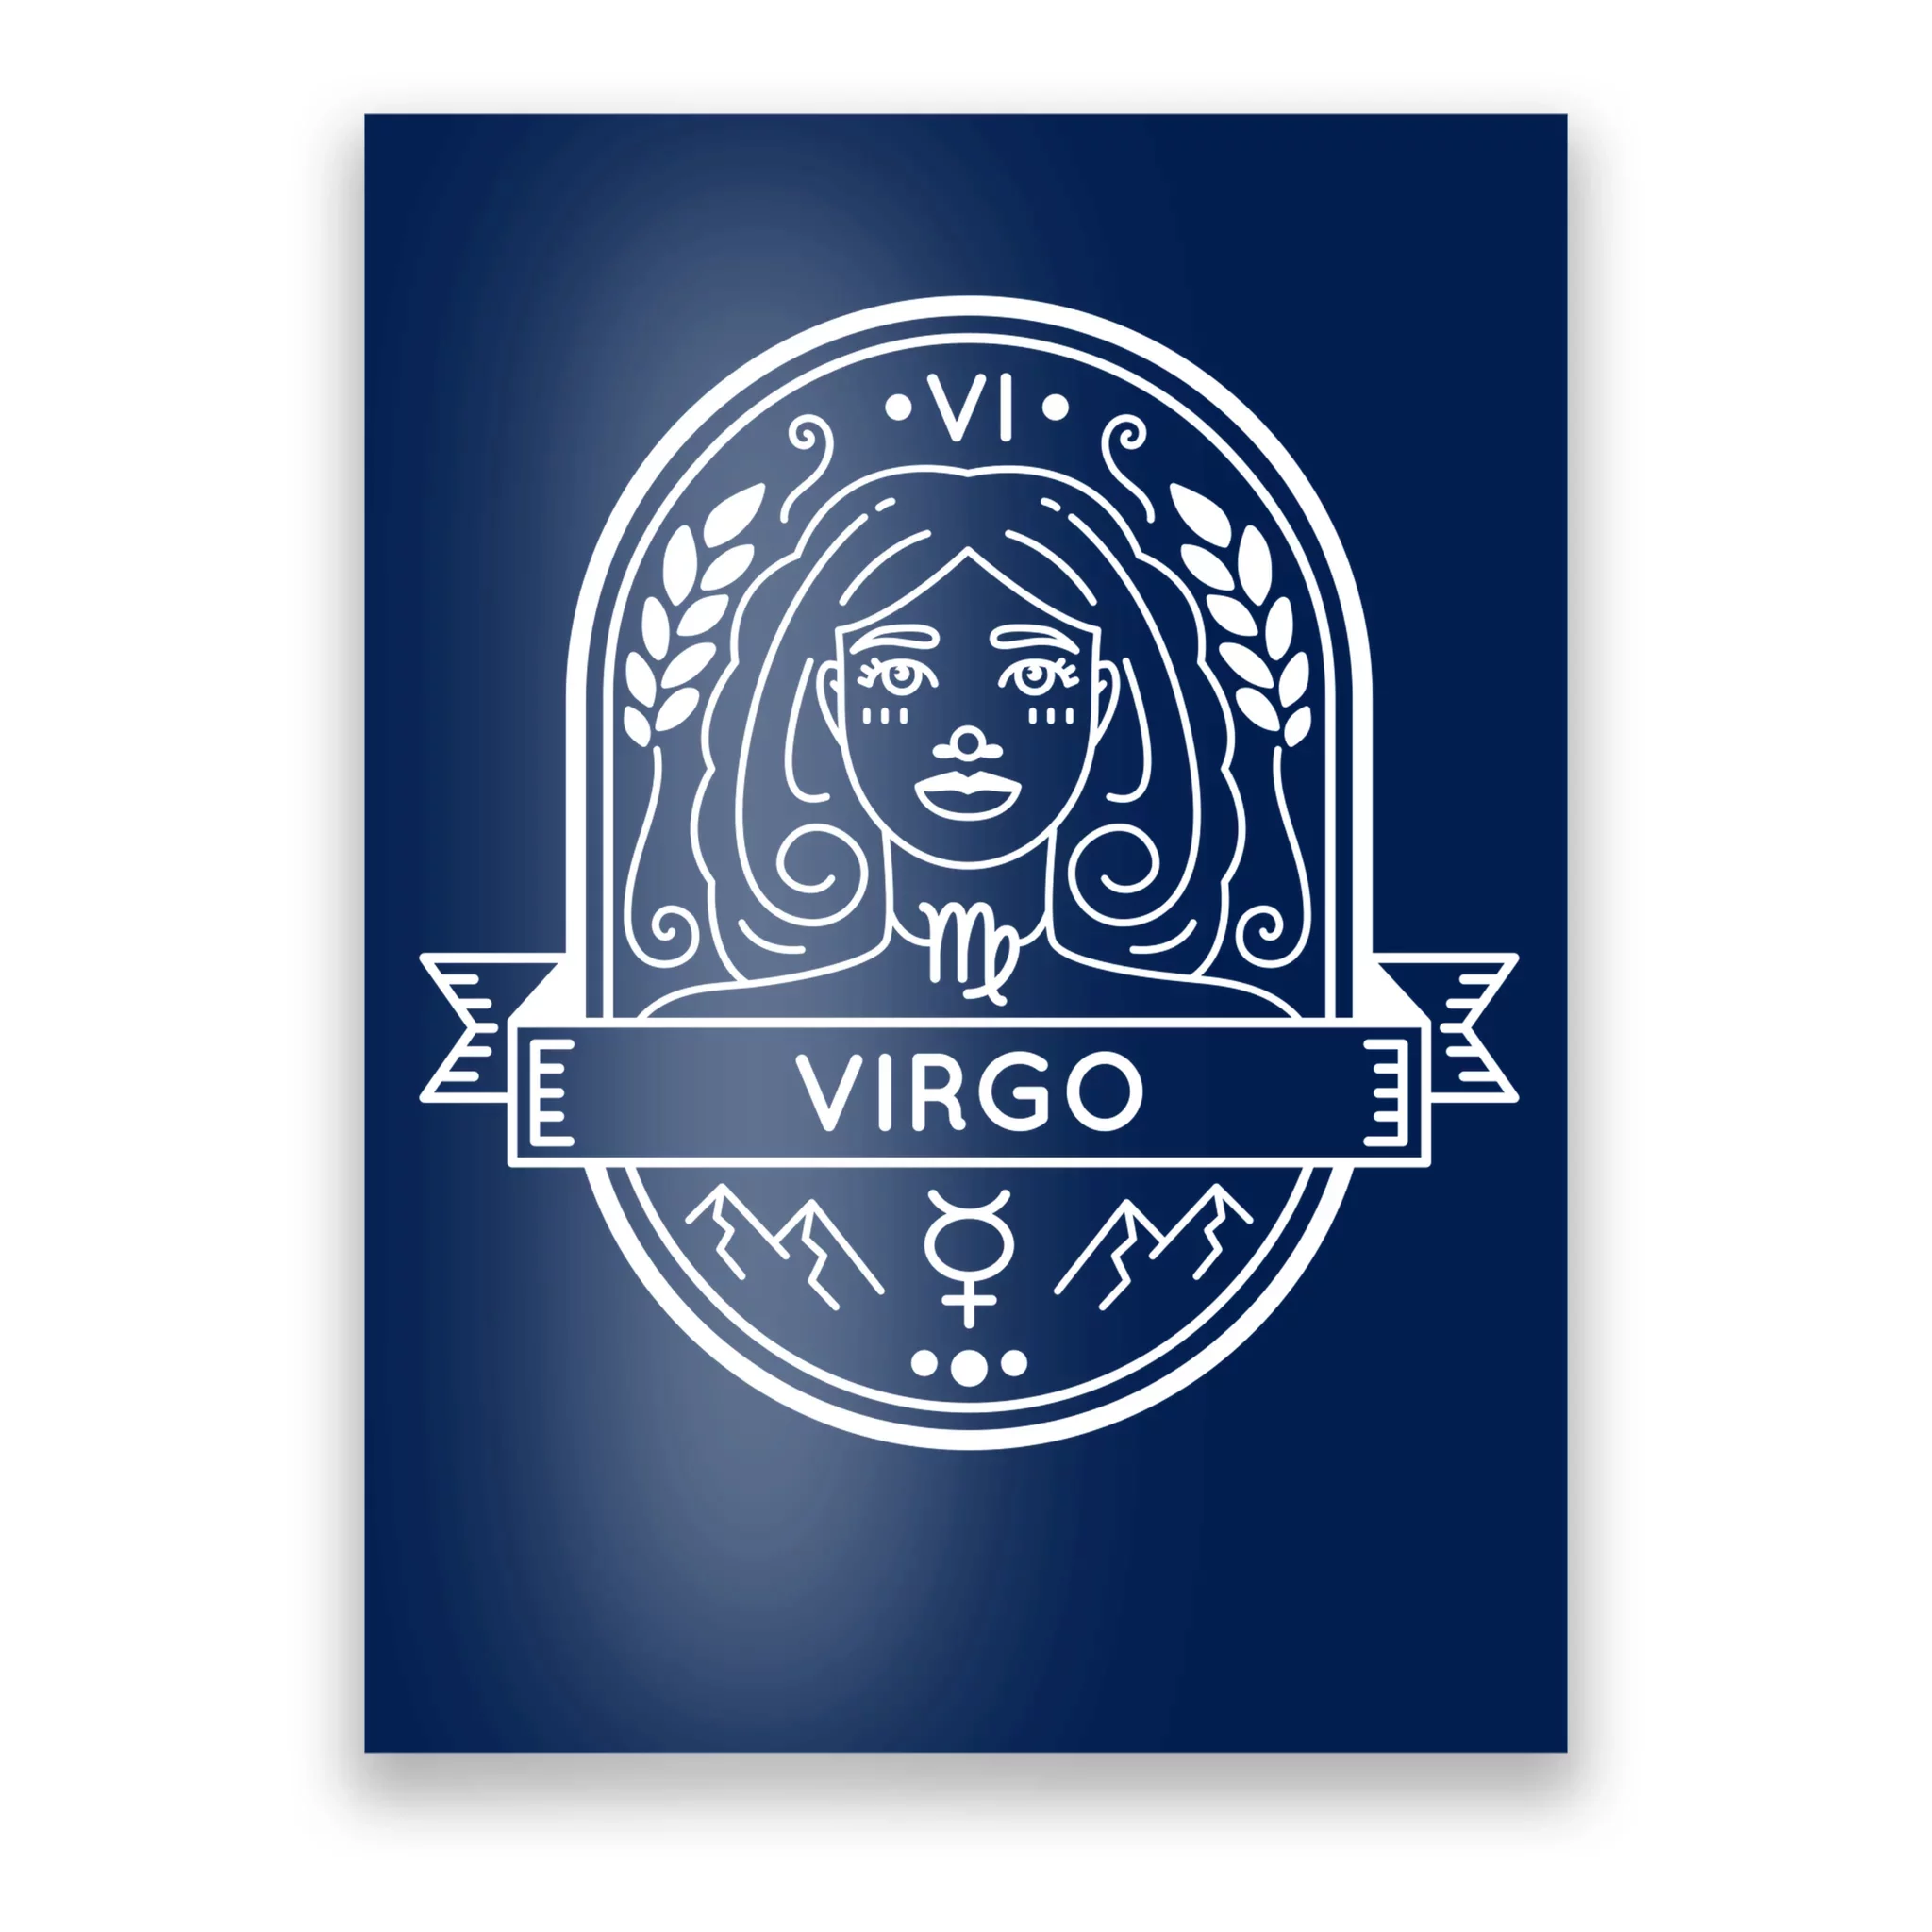 Virgo zodiac sign, horoscope symbol, vector - Stock Illustration [54286757]  - PIXTA